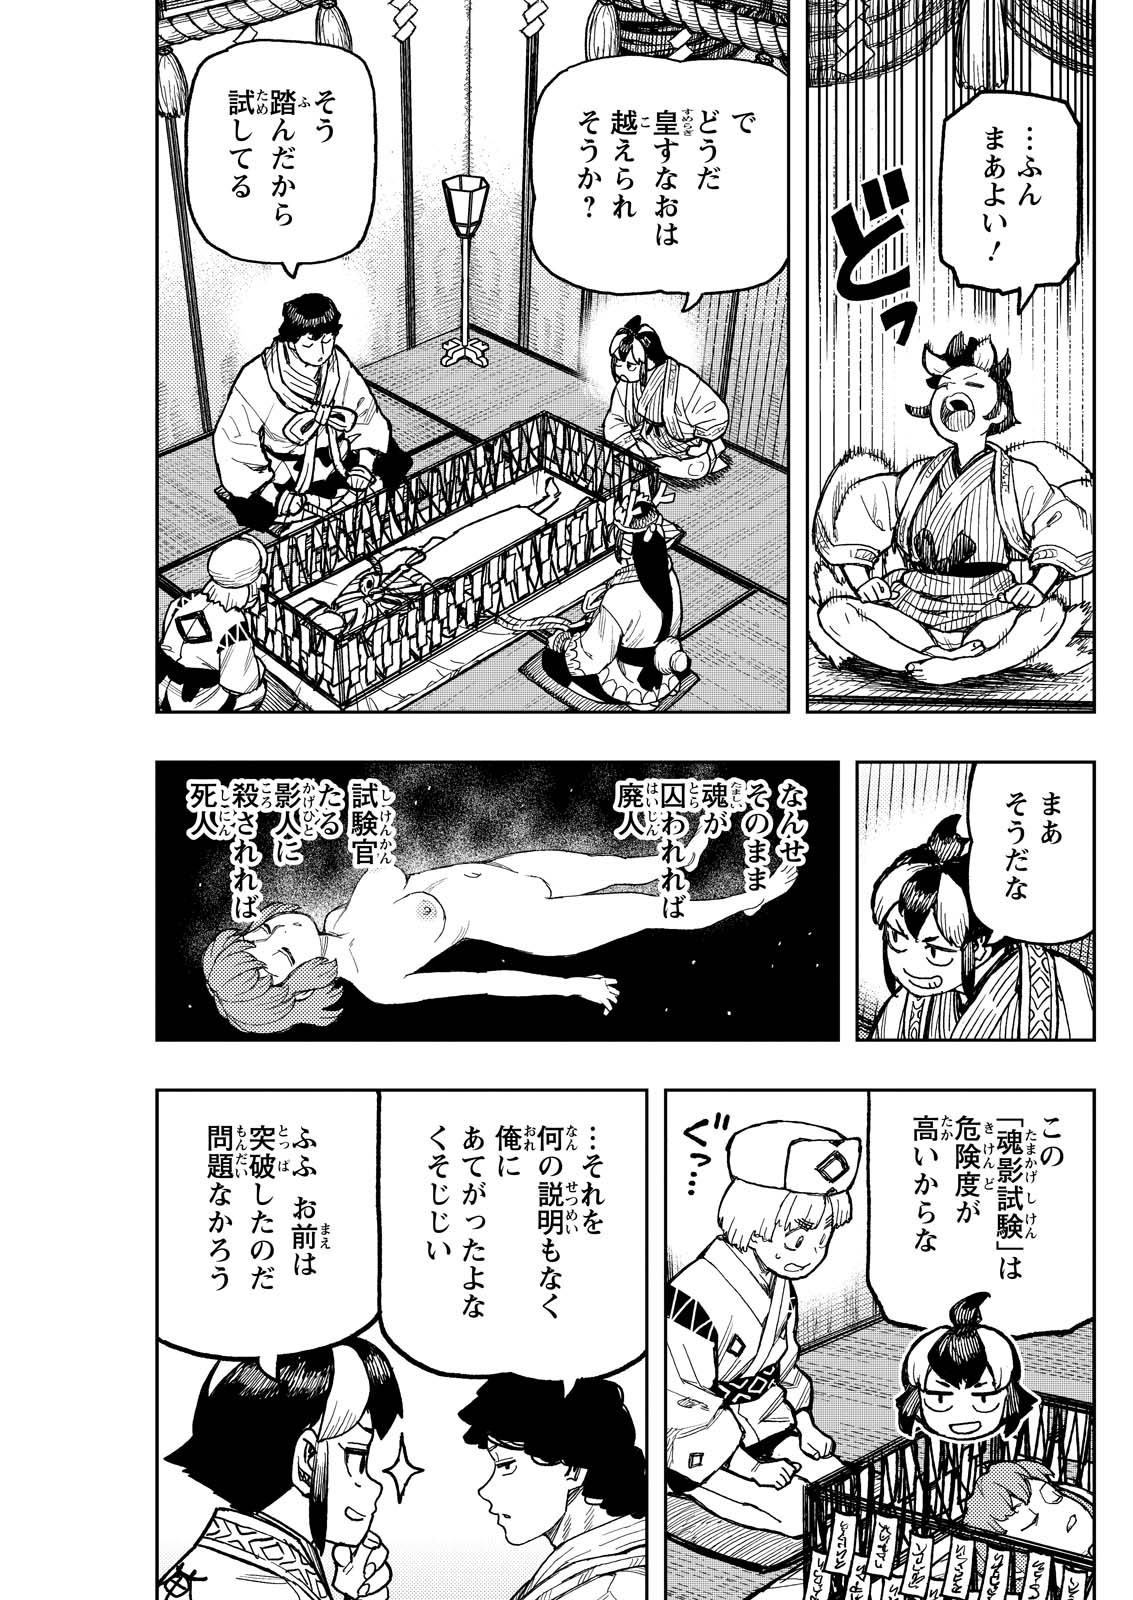 Tsugumomo - Chapter 168 - Page 15